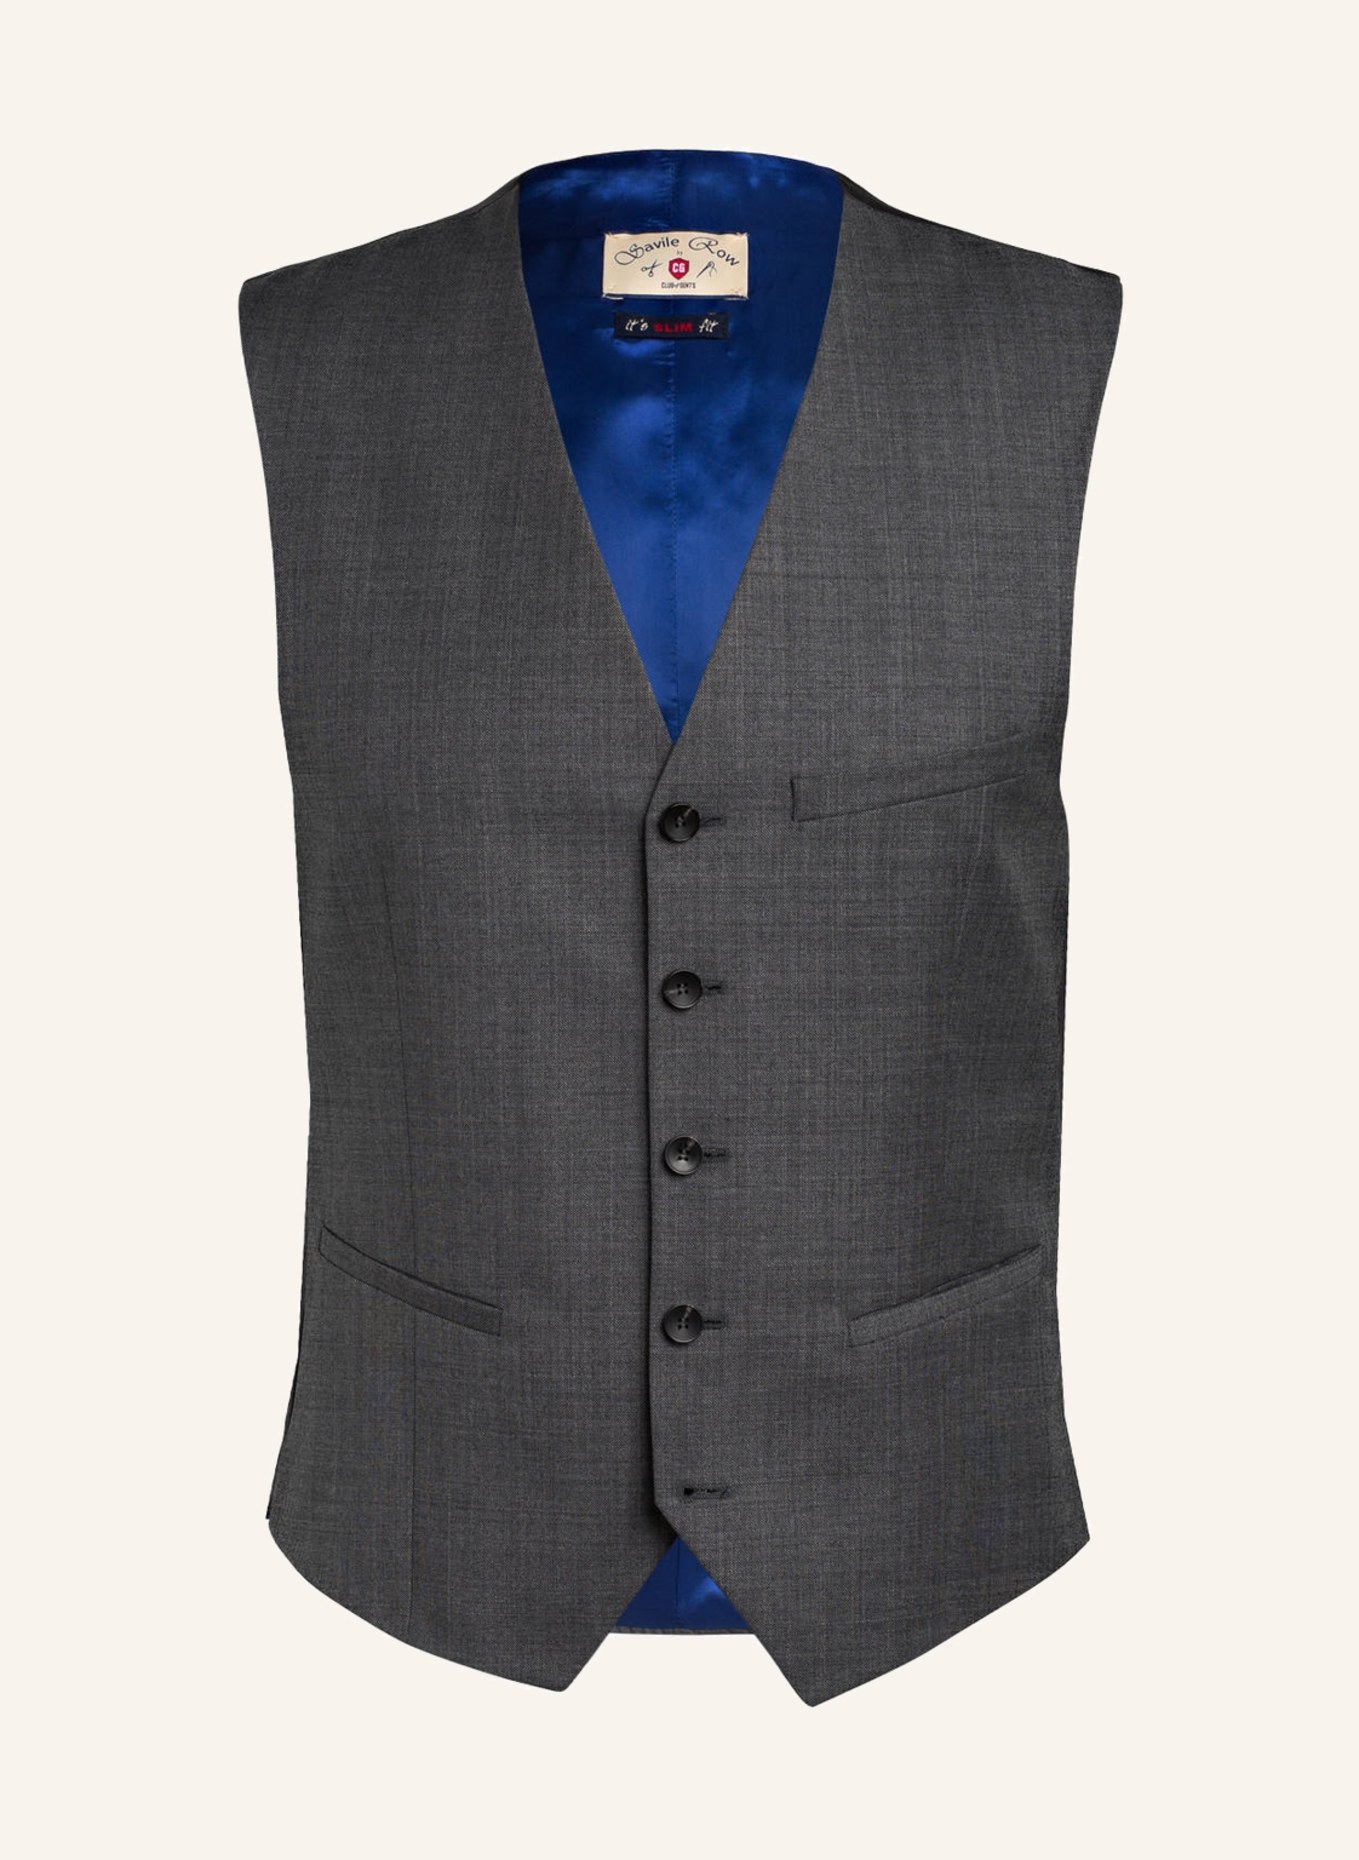 CG - CLUB of GENTS Suit jacket CURT slim fit, Color: 81 grau hell (Image 1)